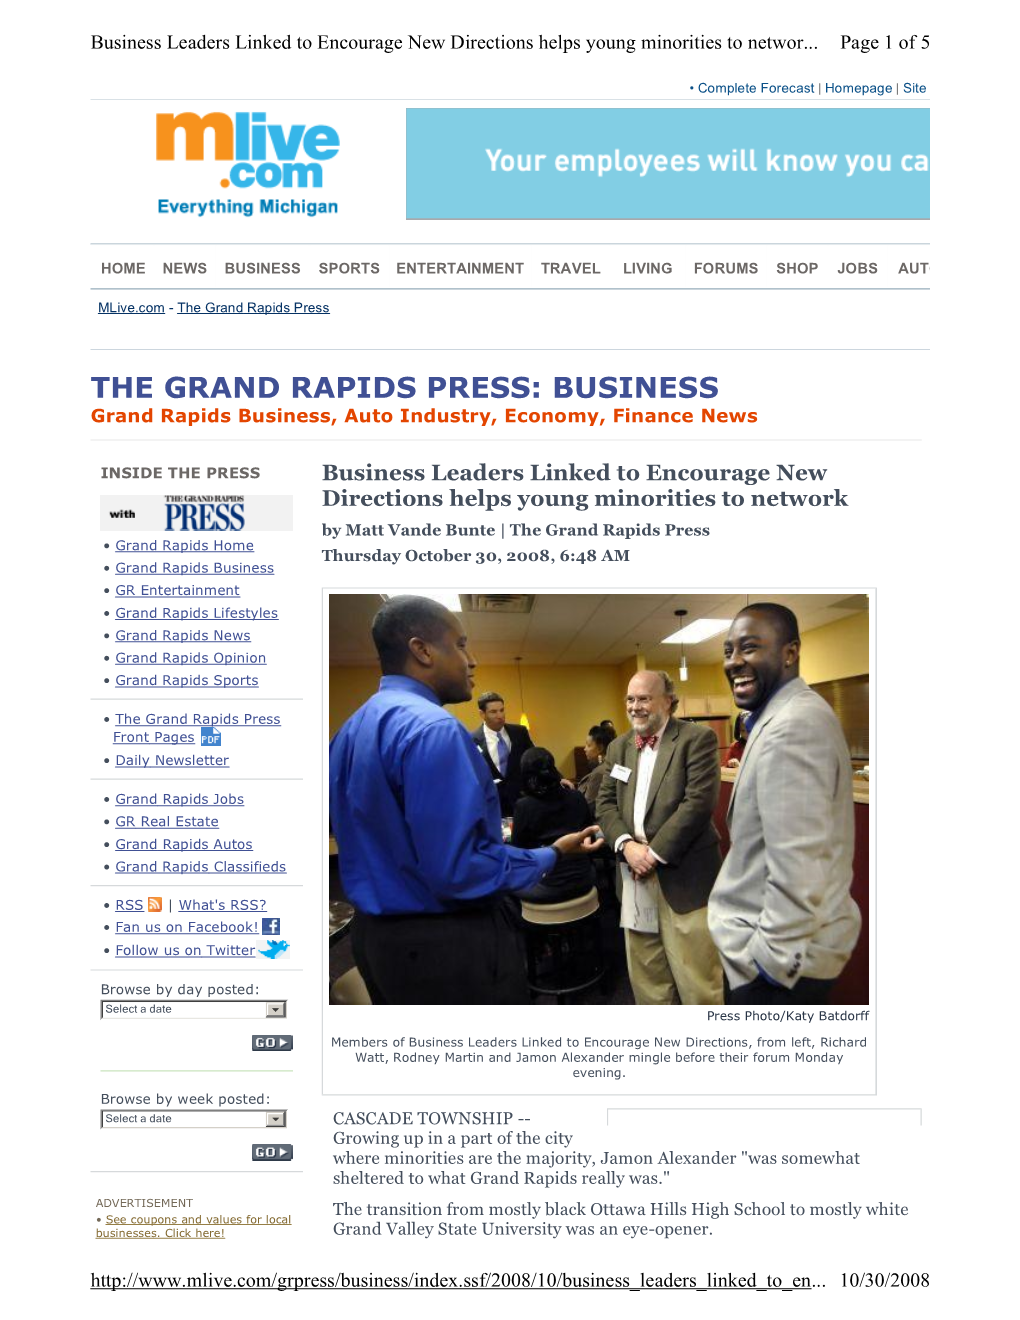 THE GRAND RAPIDS PRESS: BUSINESS Grand Rapids Business, Auto Industry, Economy, Finance News